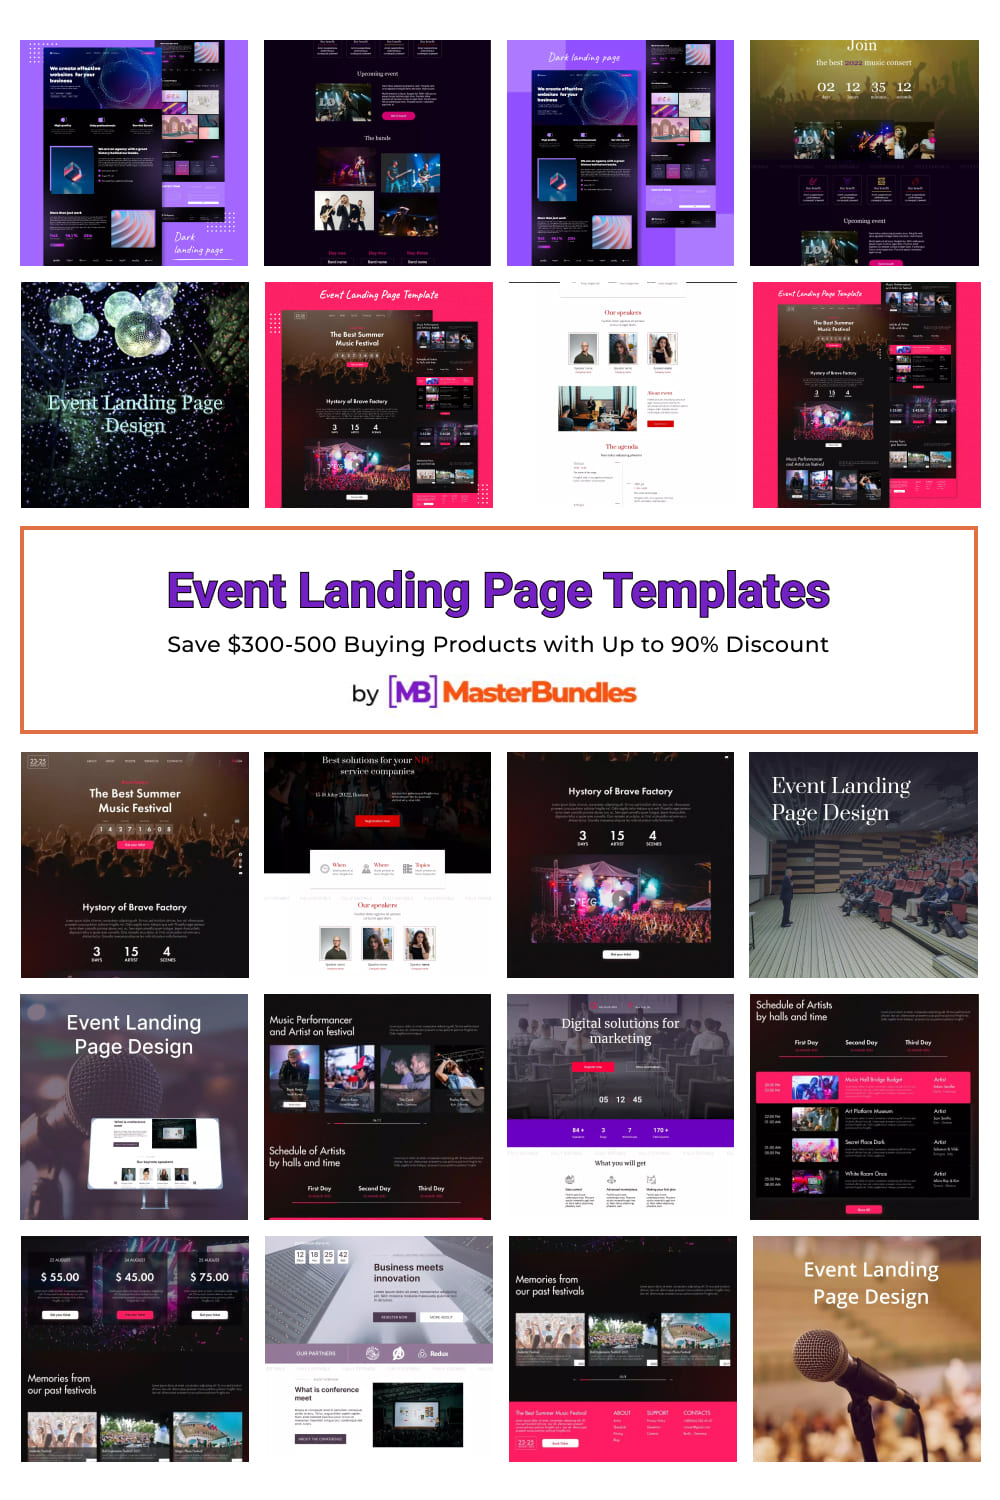 Event Landing Page Templates Pinterest image.